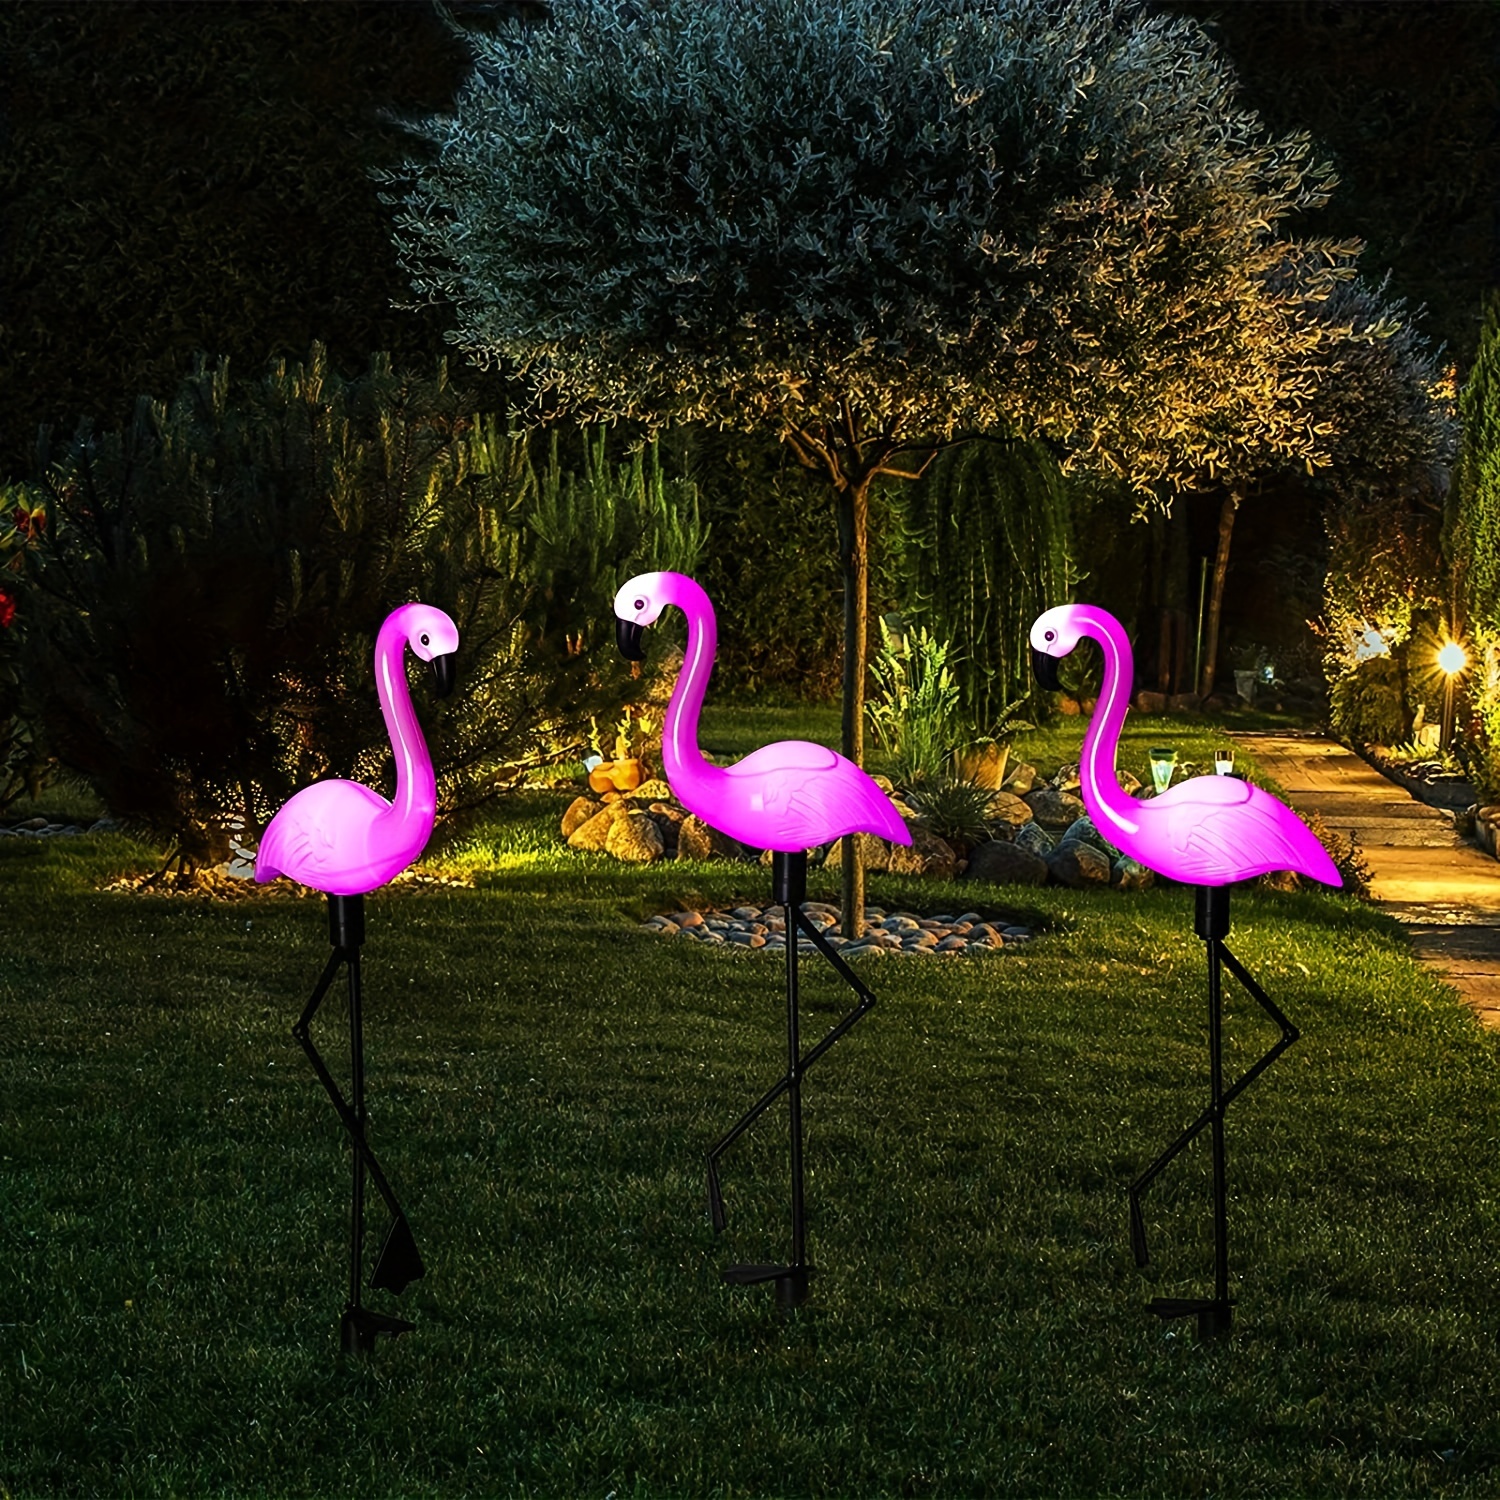 

1pc/3pcs Garden Outdoor Flamingo Led Stake Lights Solar Powered Waterproof For Garden, Lawn, Patio, Pond, Backyard Decor, Halloween Decorations Lights Outdoor